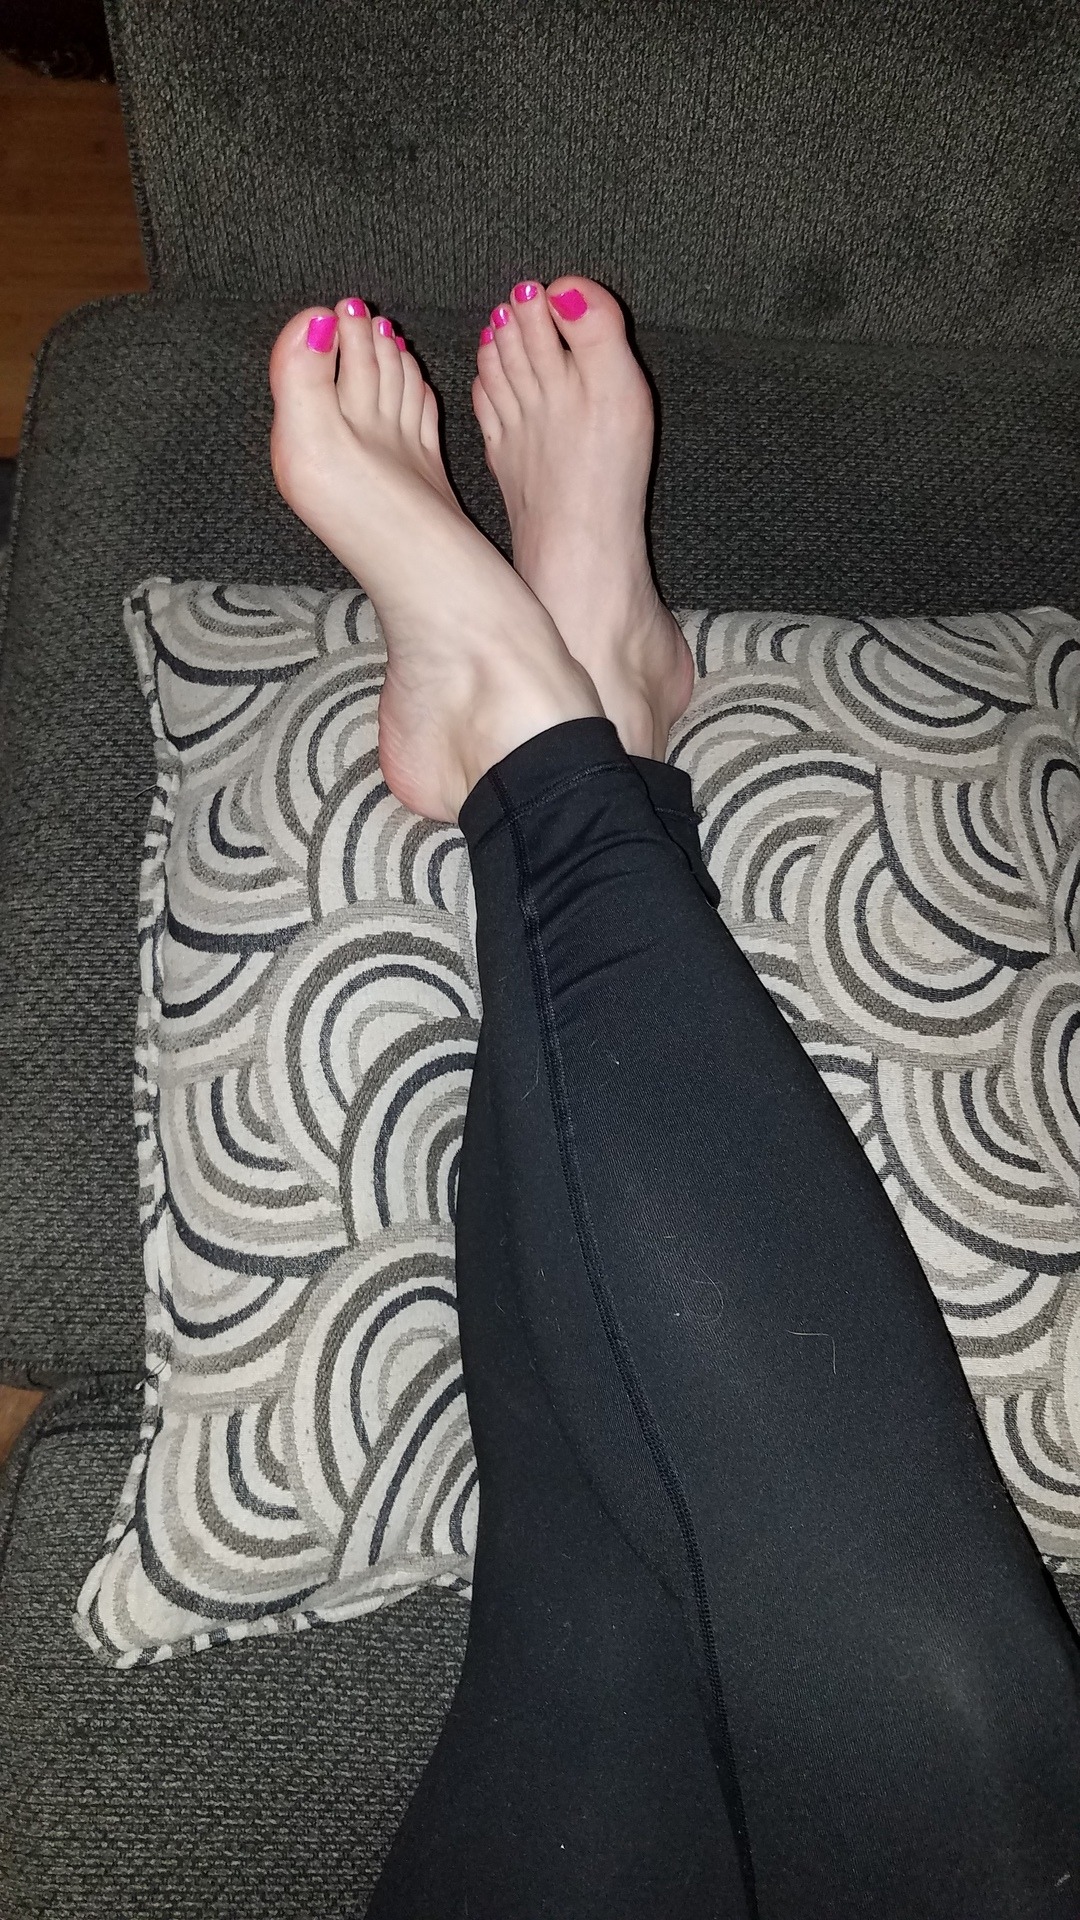 homemade sexy feet pics